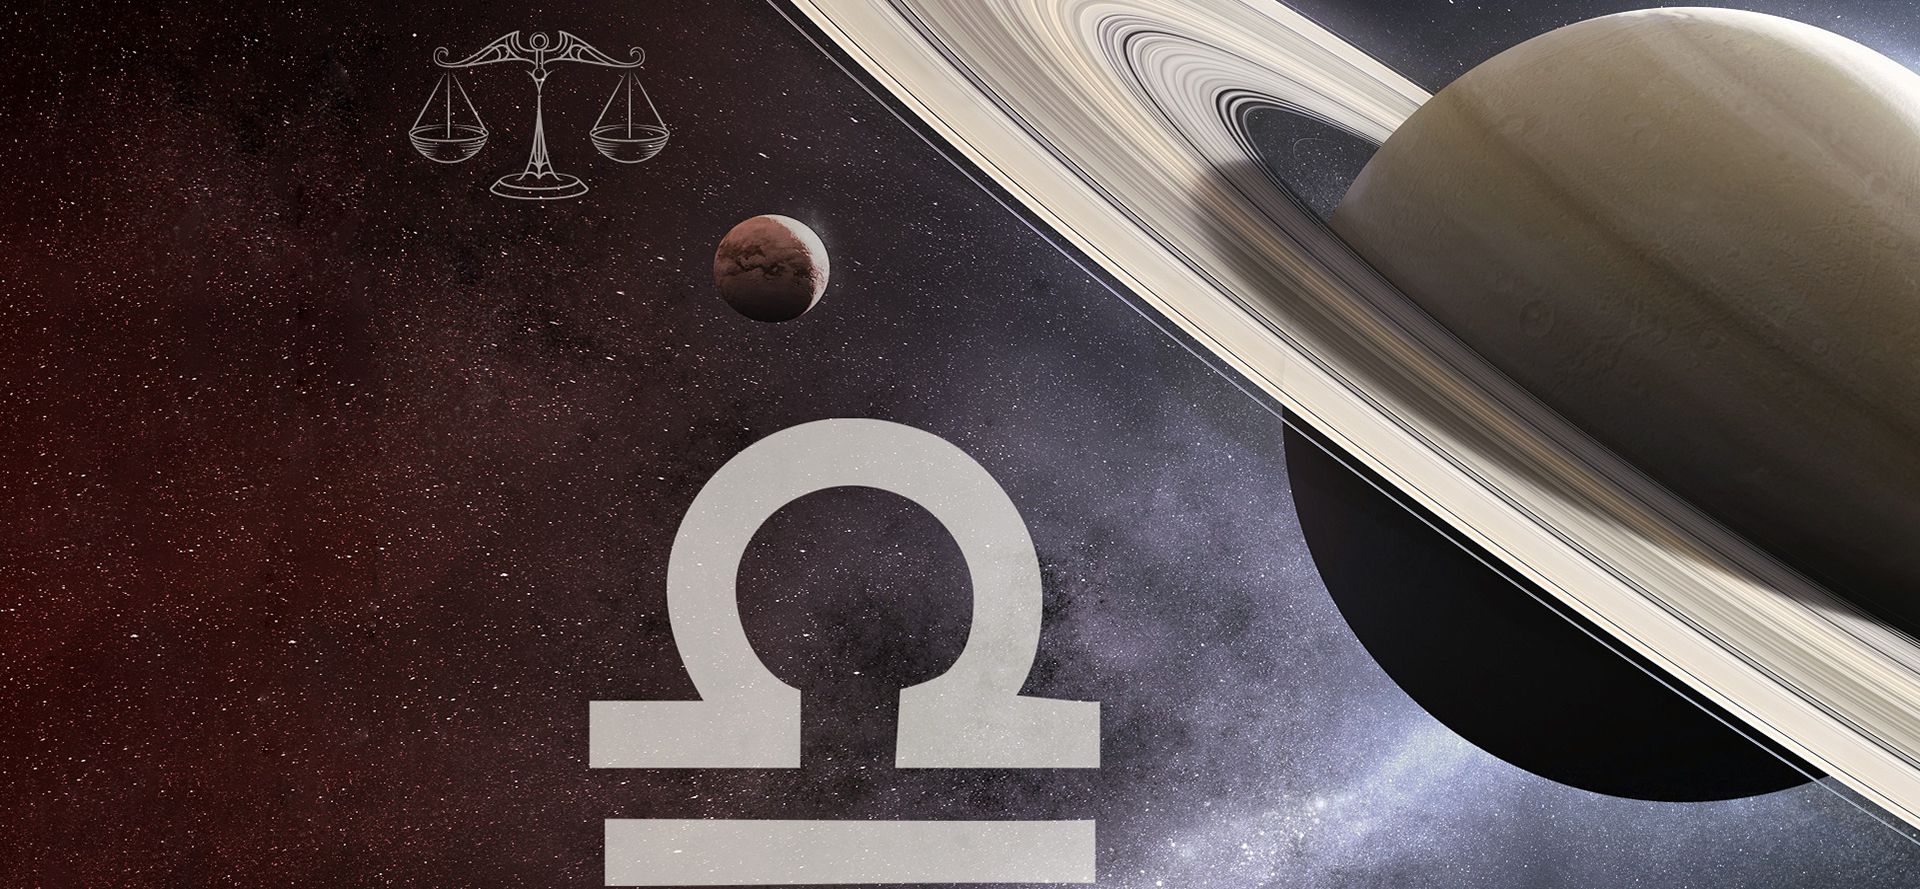 Saturn and libra sign.